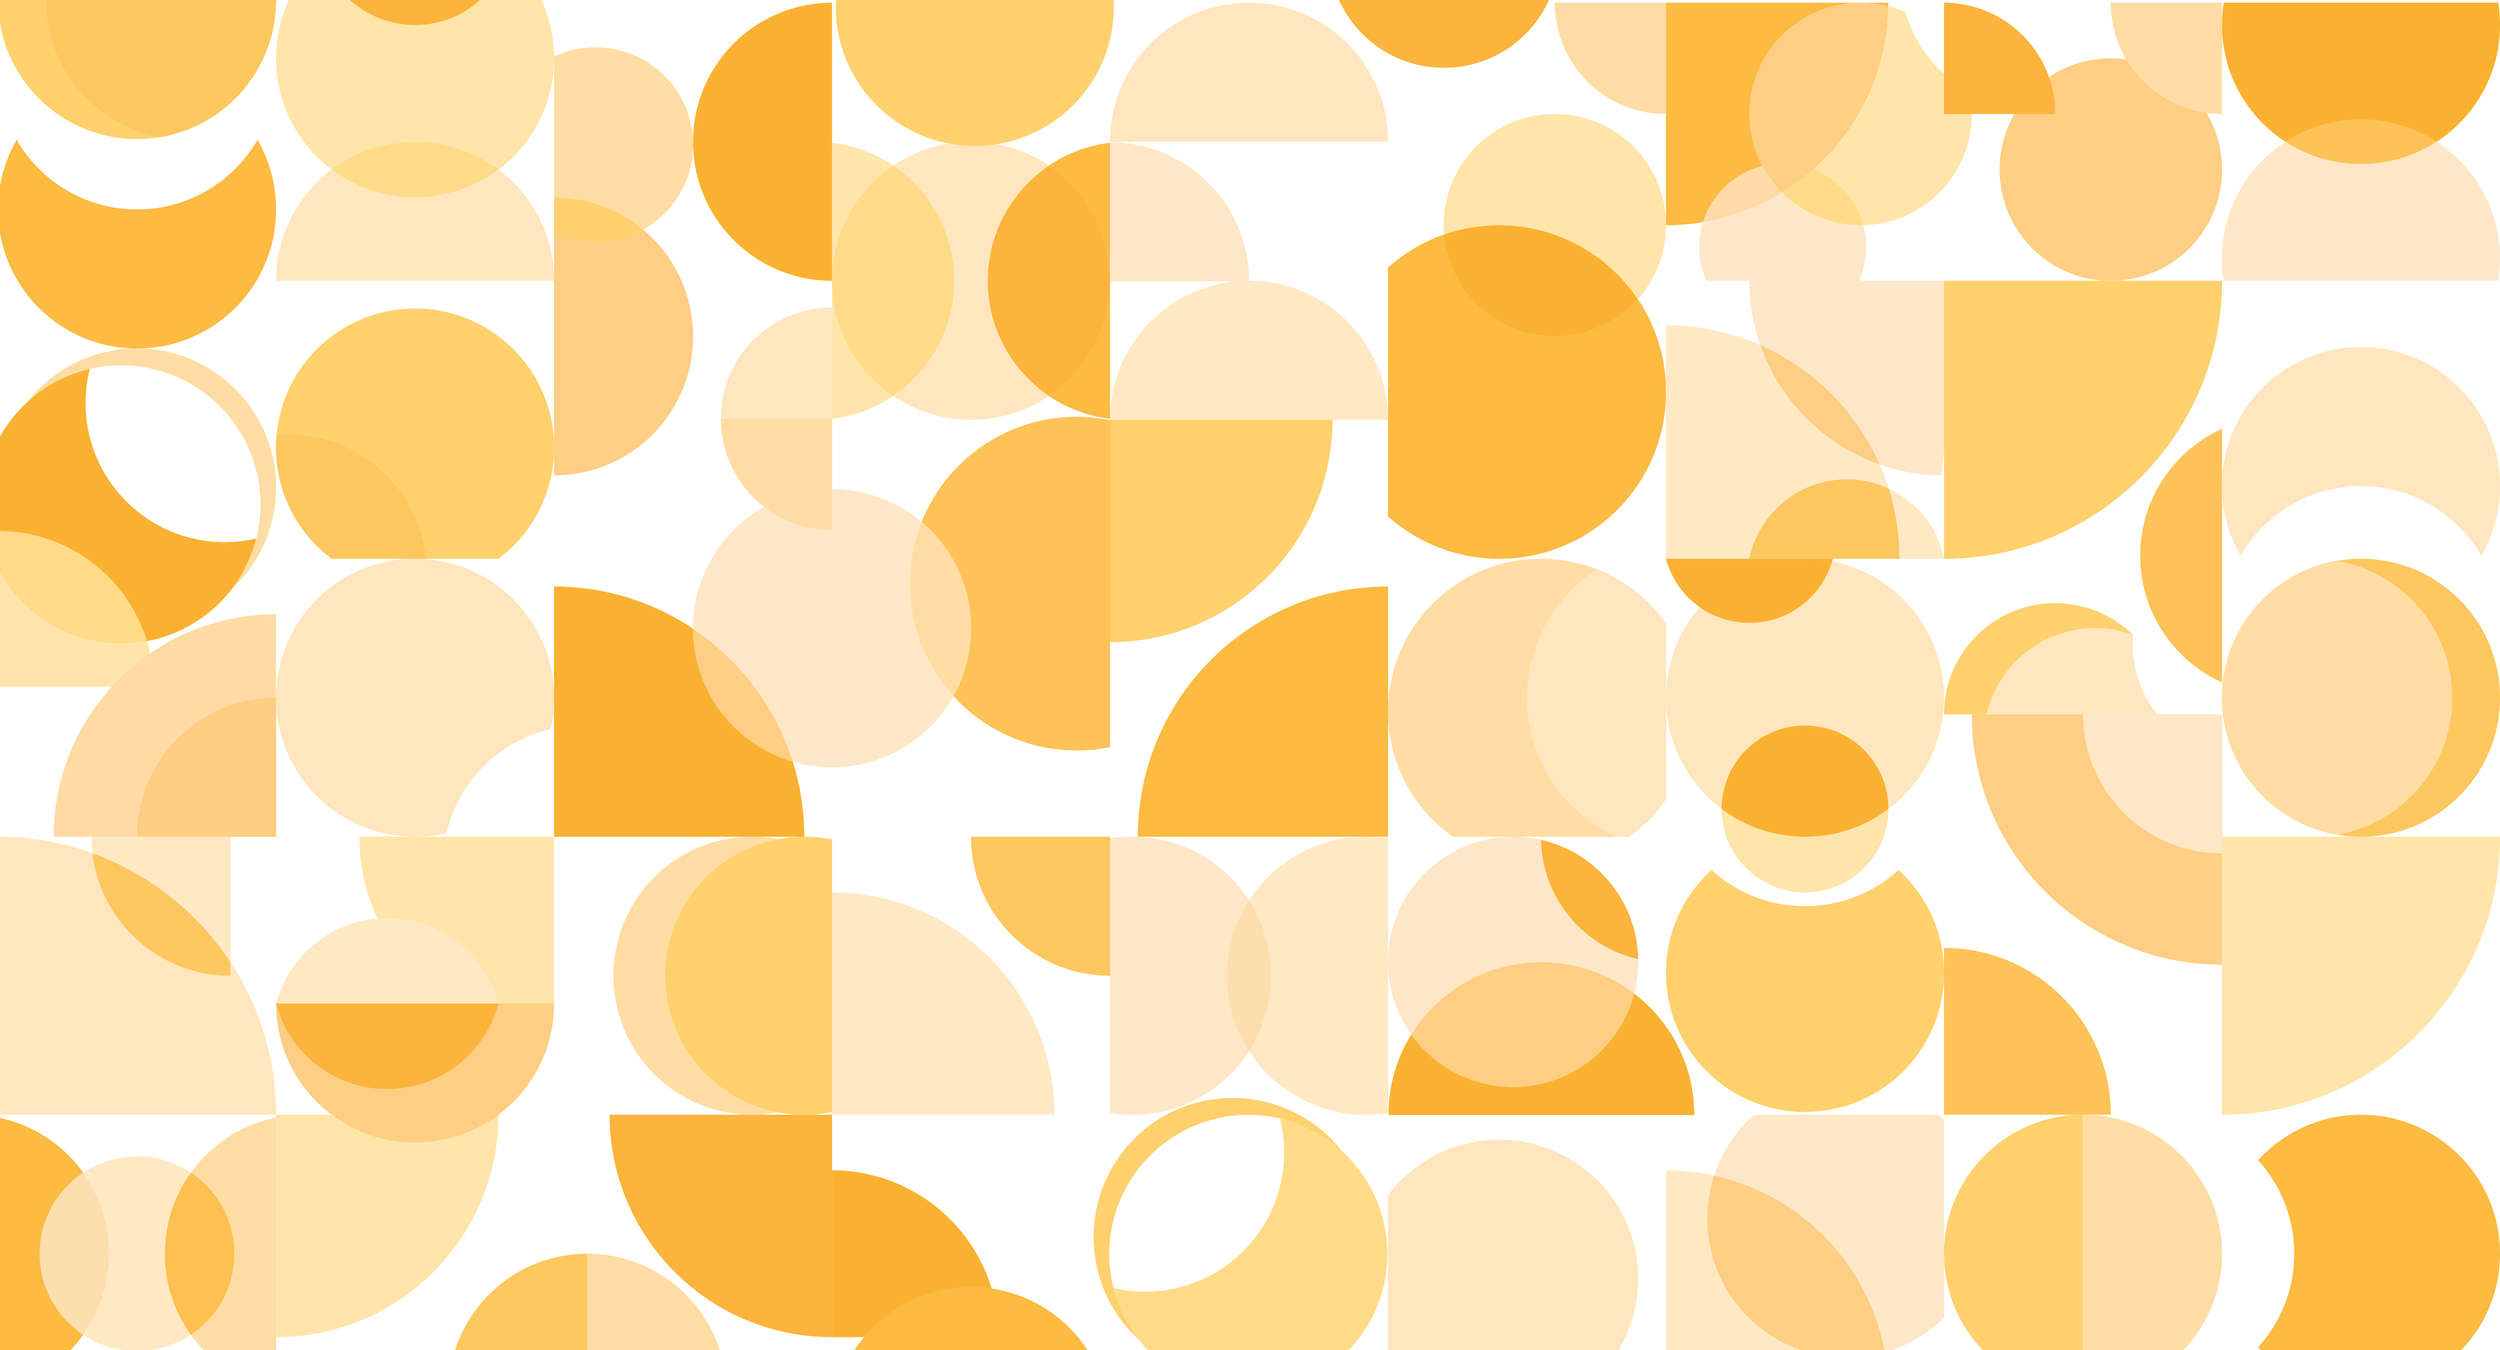             Photo wallpaper retro design, geometric pattern - orange, yellow, white
        